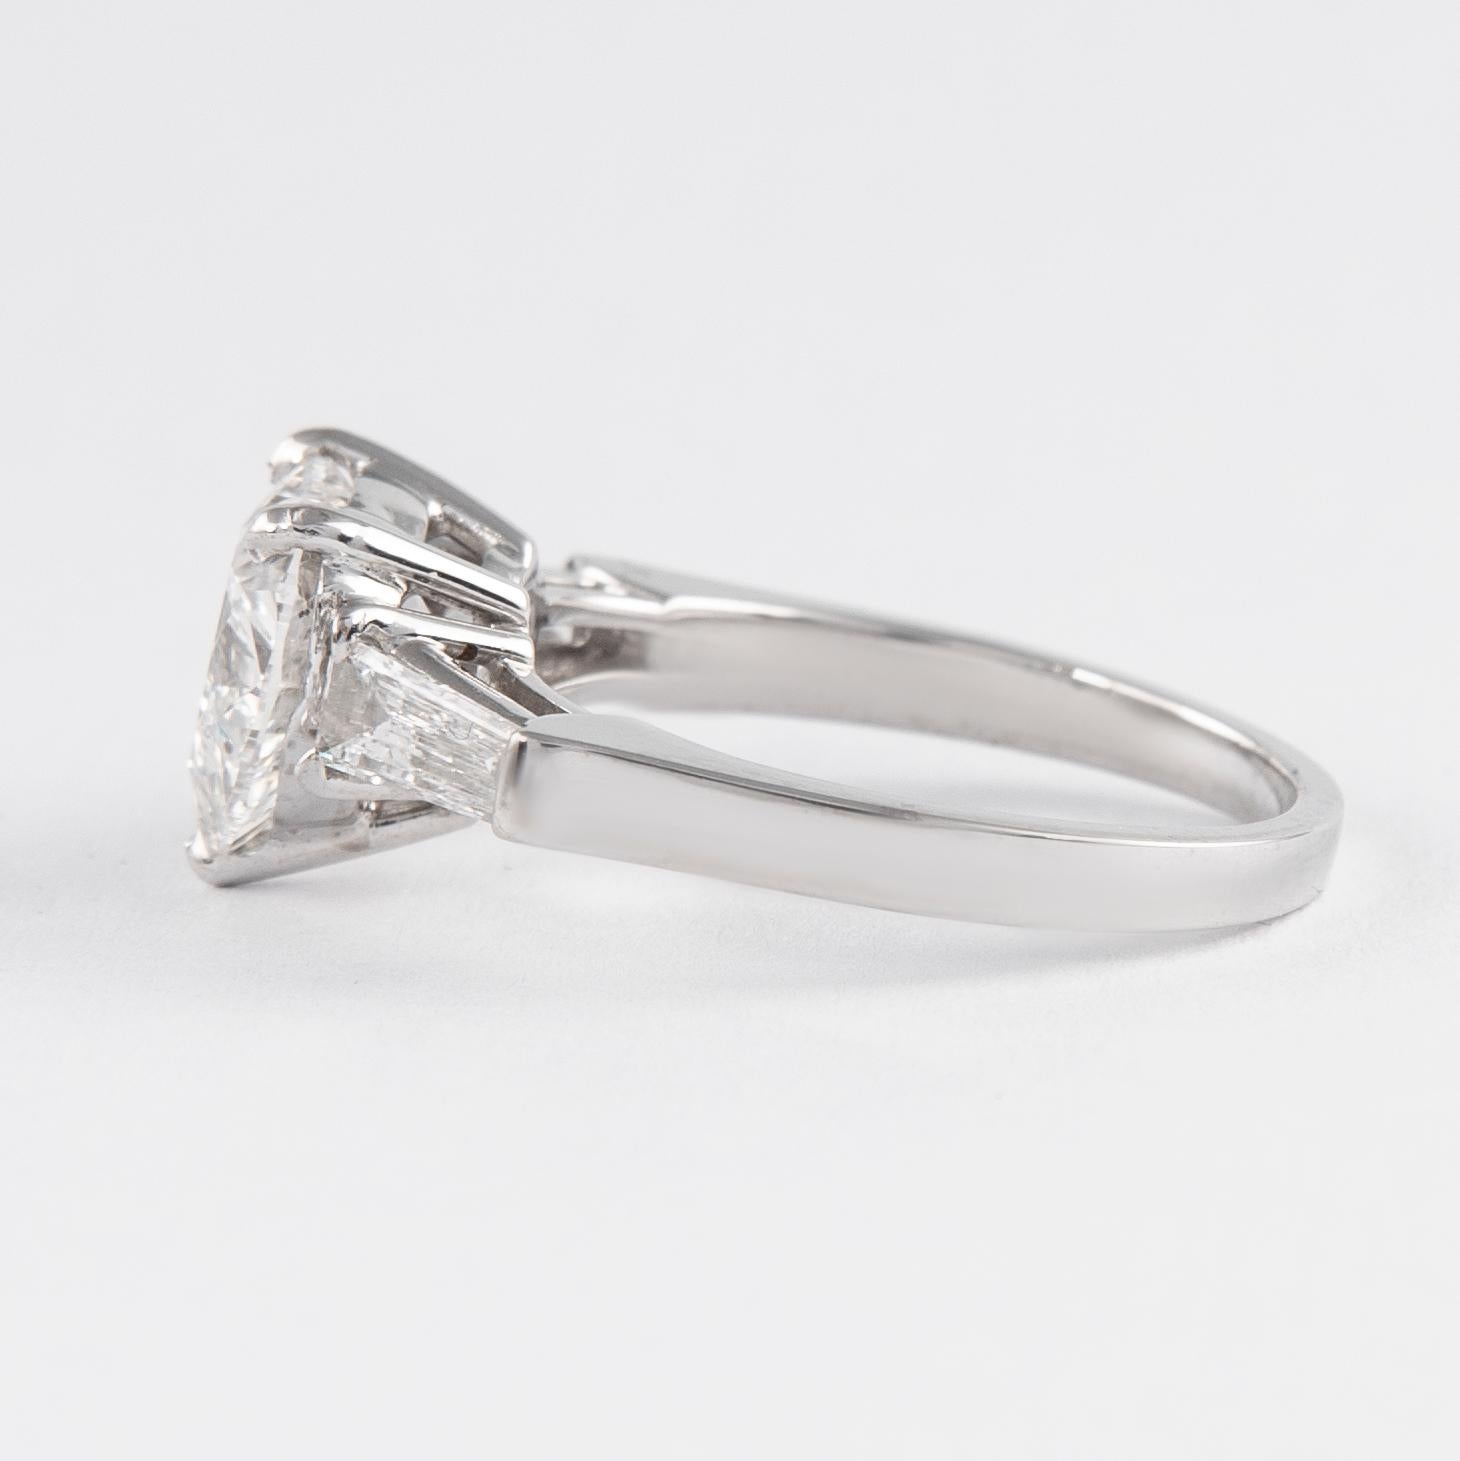 3 carat heart diamond ring